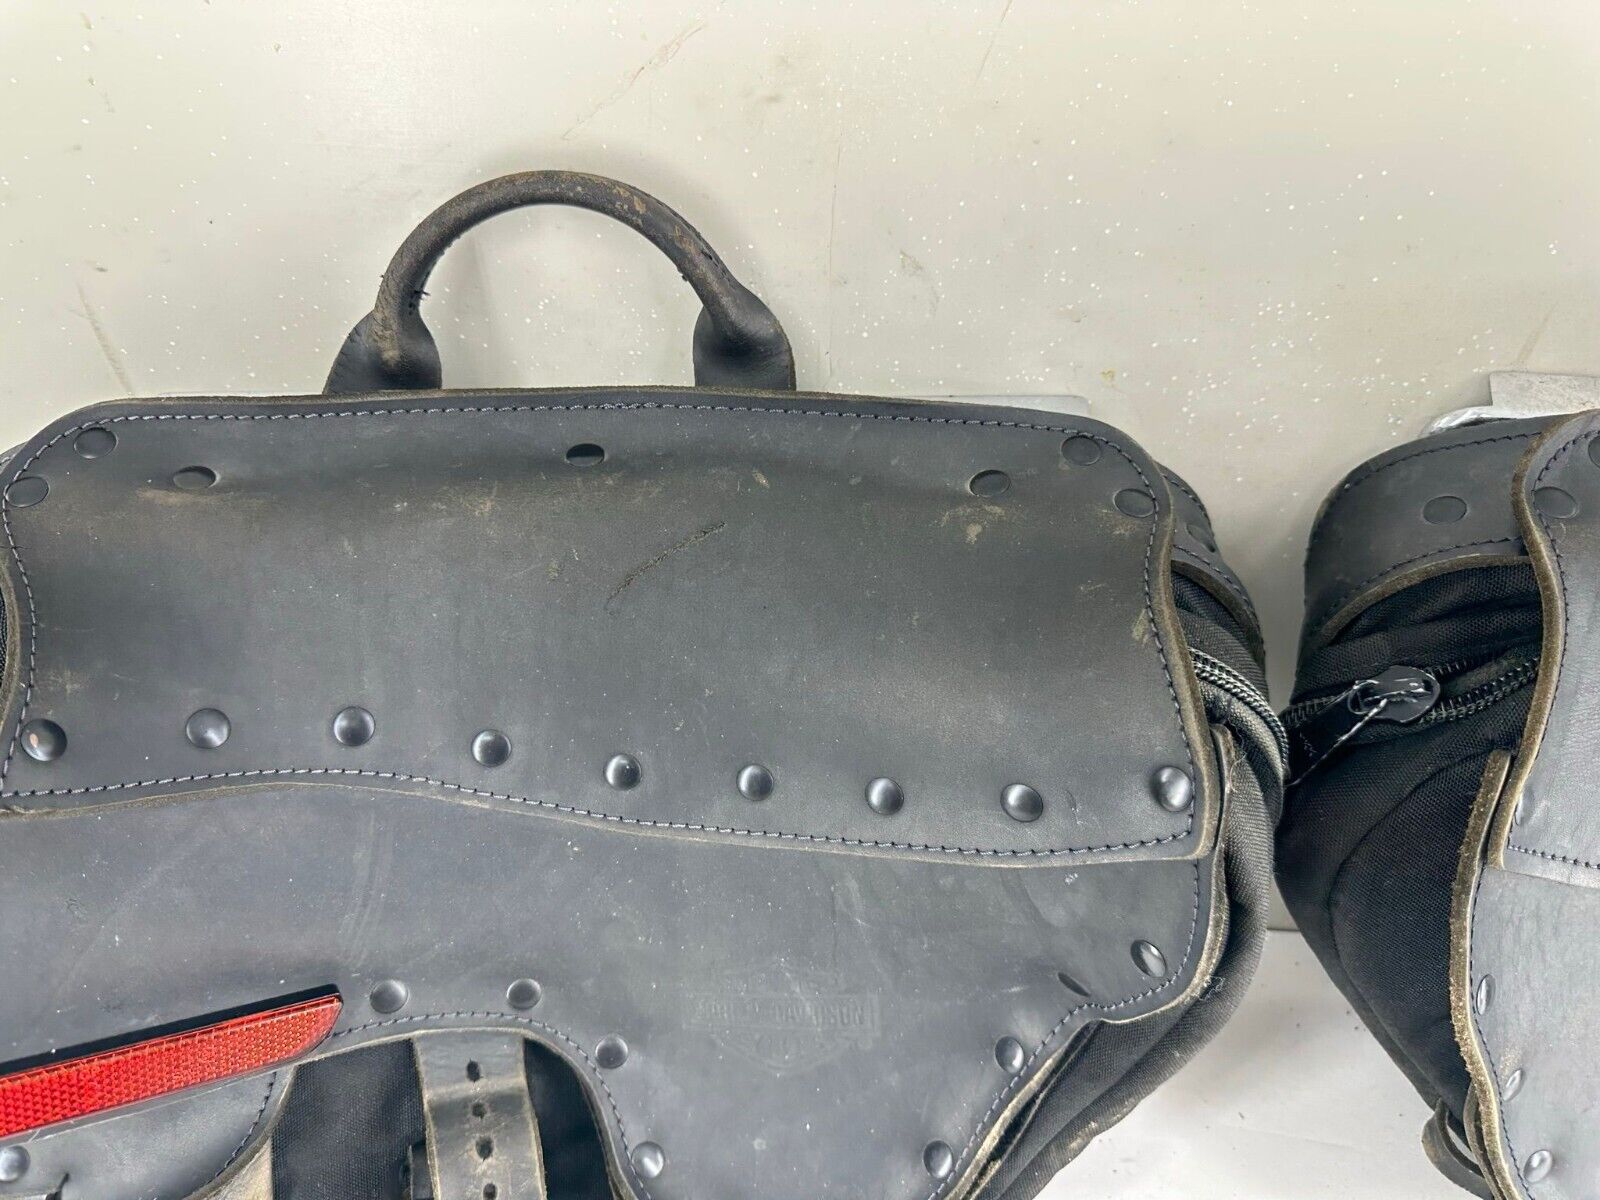 1996 HARLEY DAVIDSON DYNA OEM HO Convertible Canvas + Leather Saddle Bags